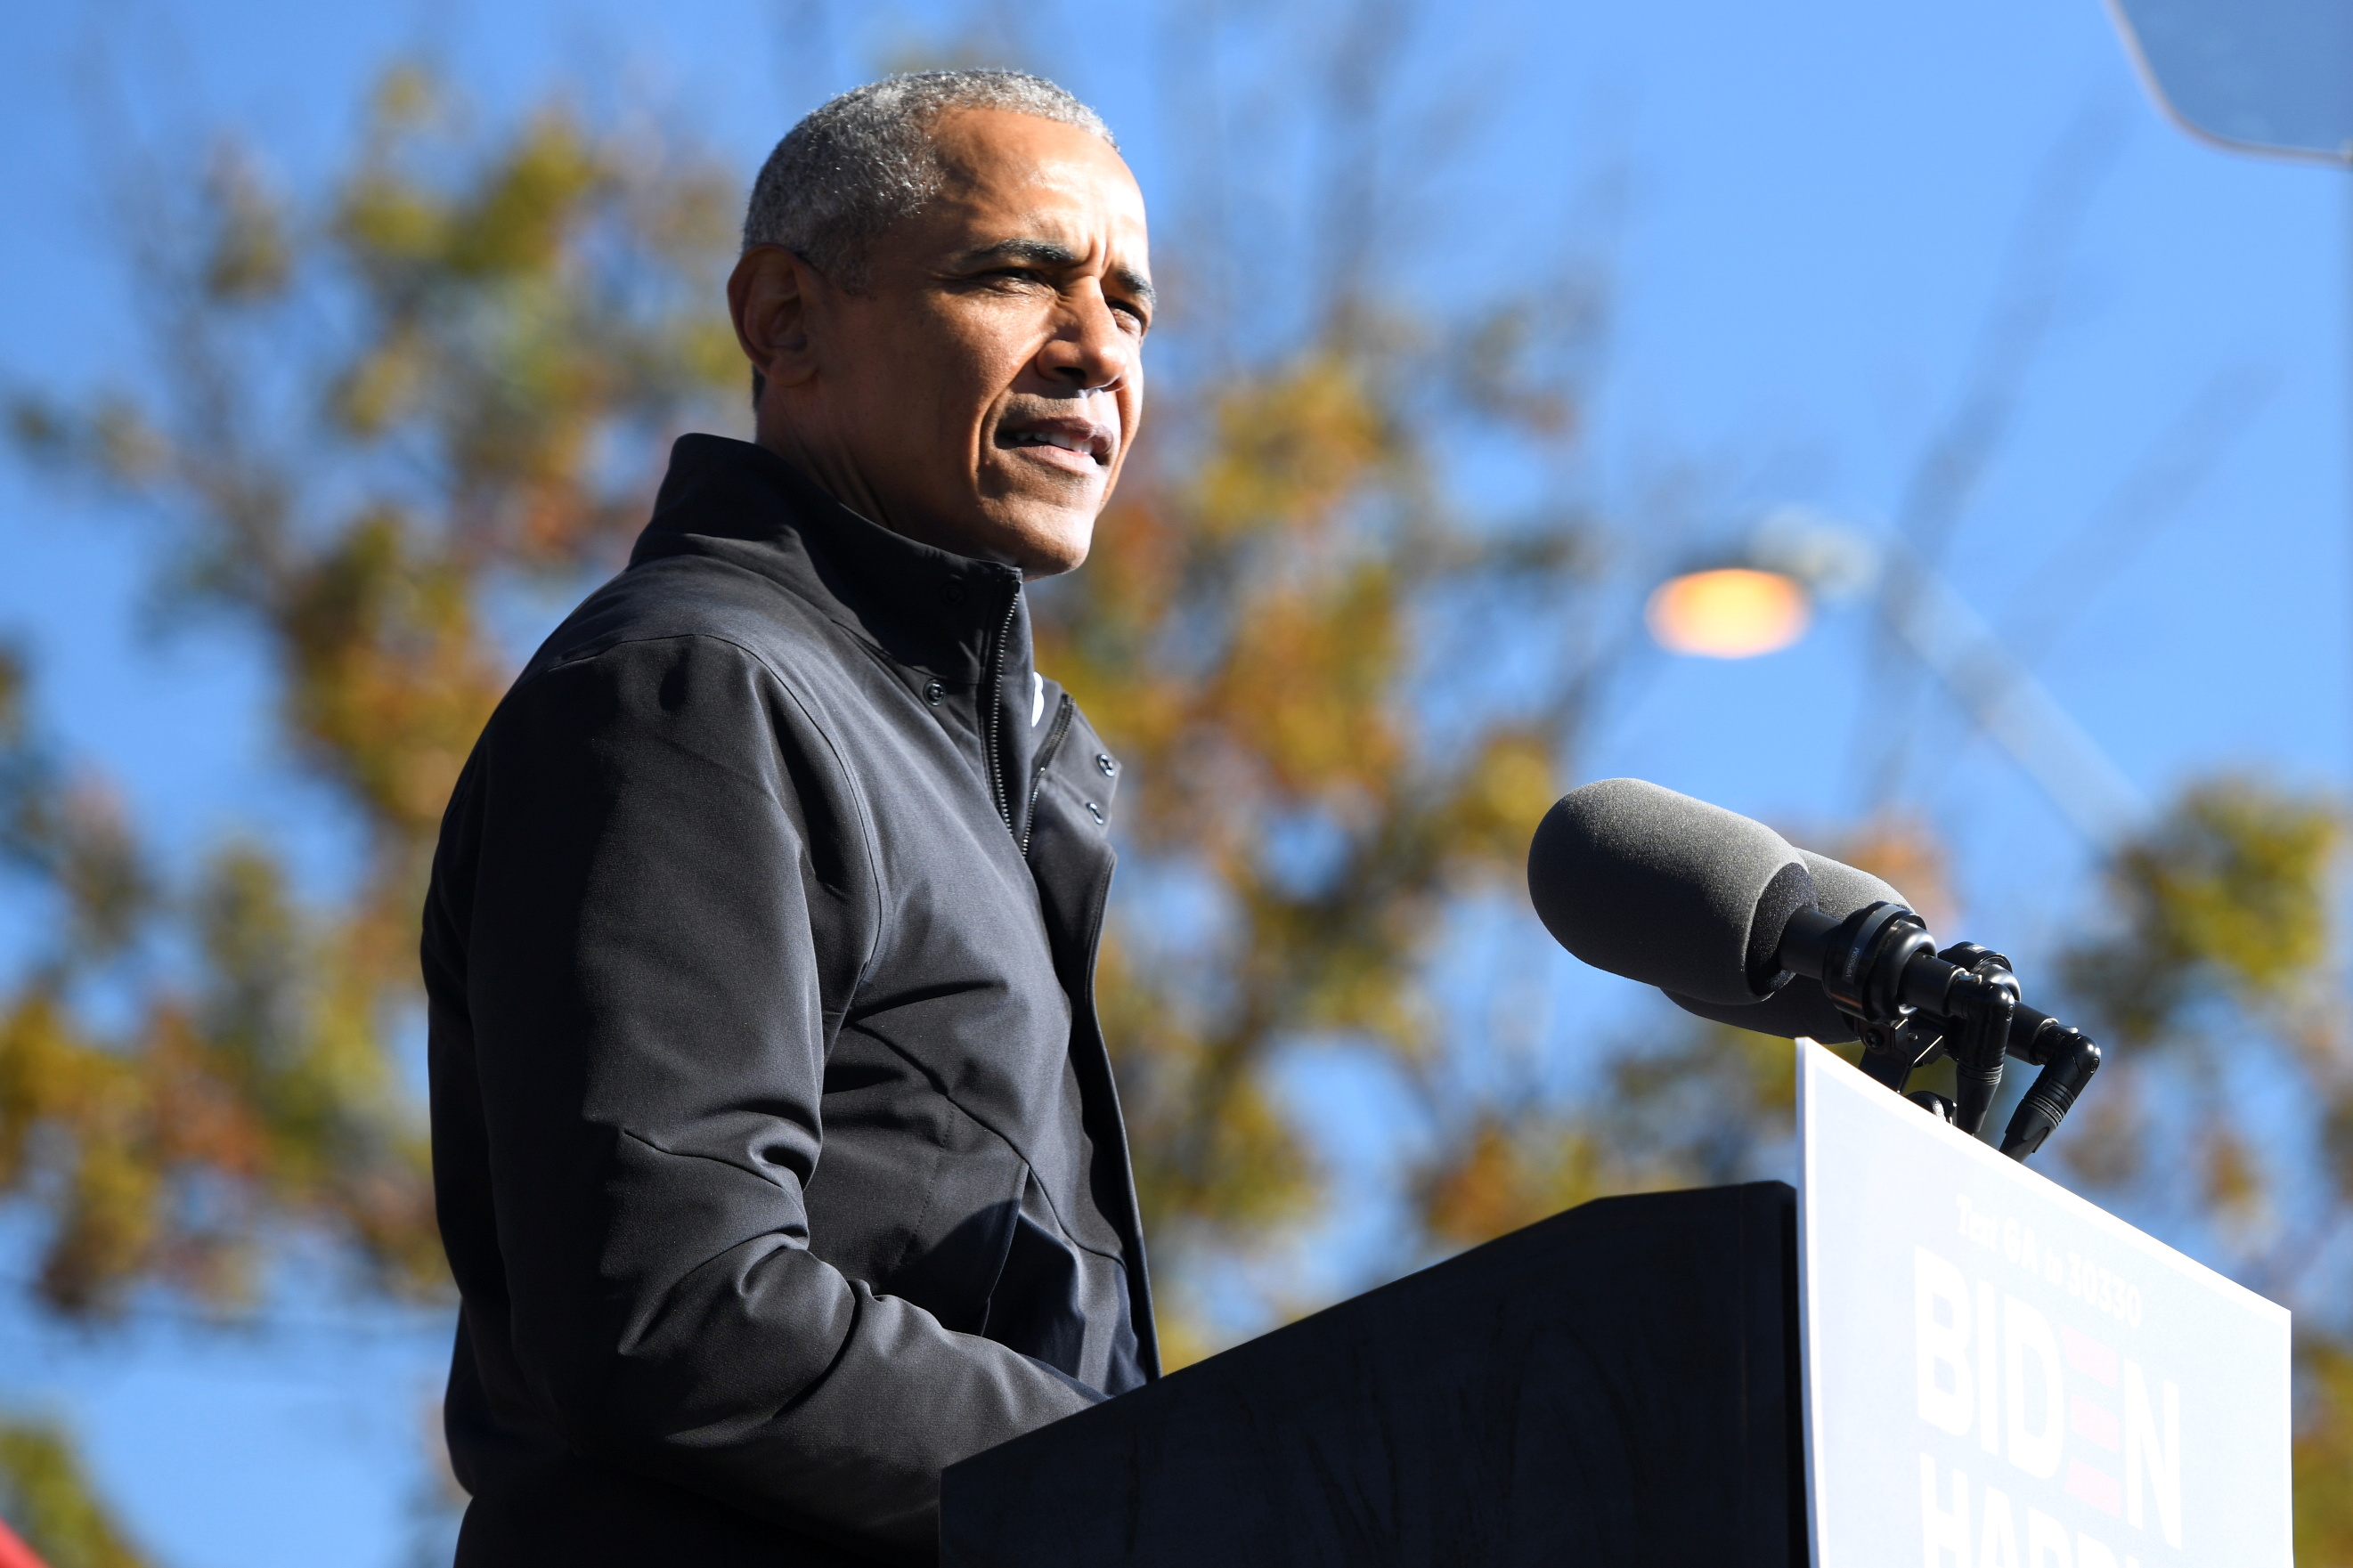 Former President Barack Obama addresses voters one day before the election, in Atlanta, Georgia